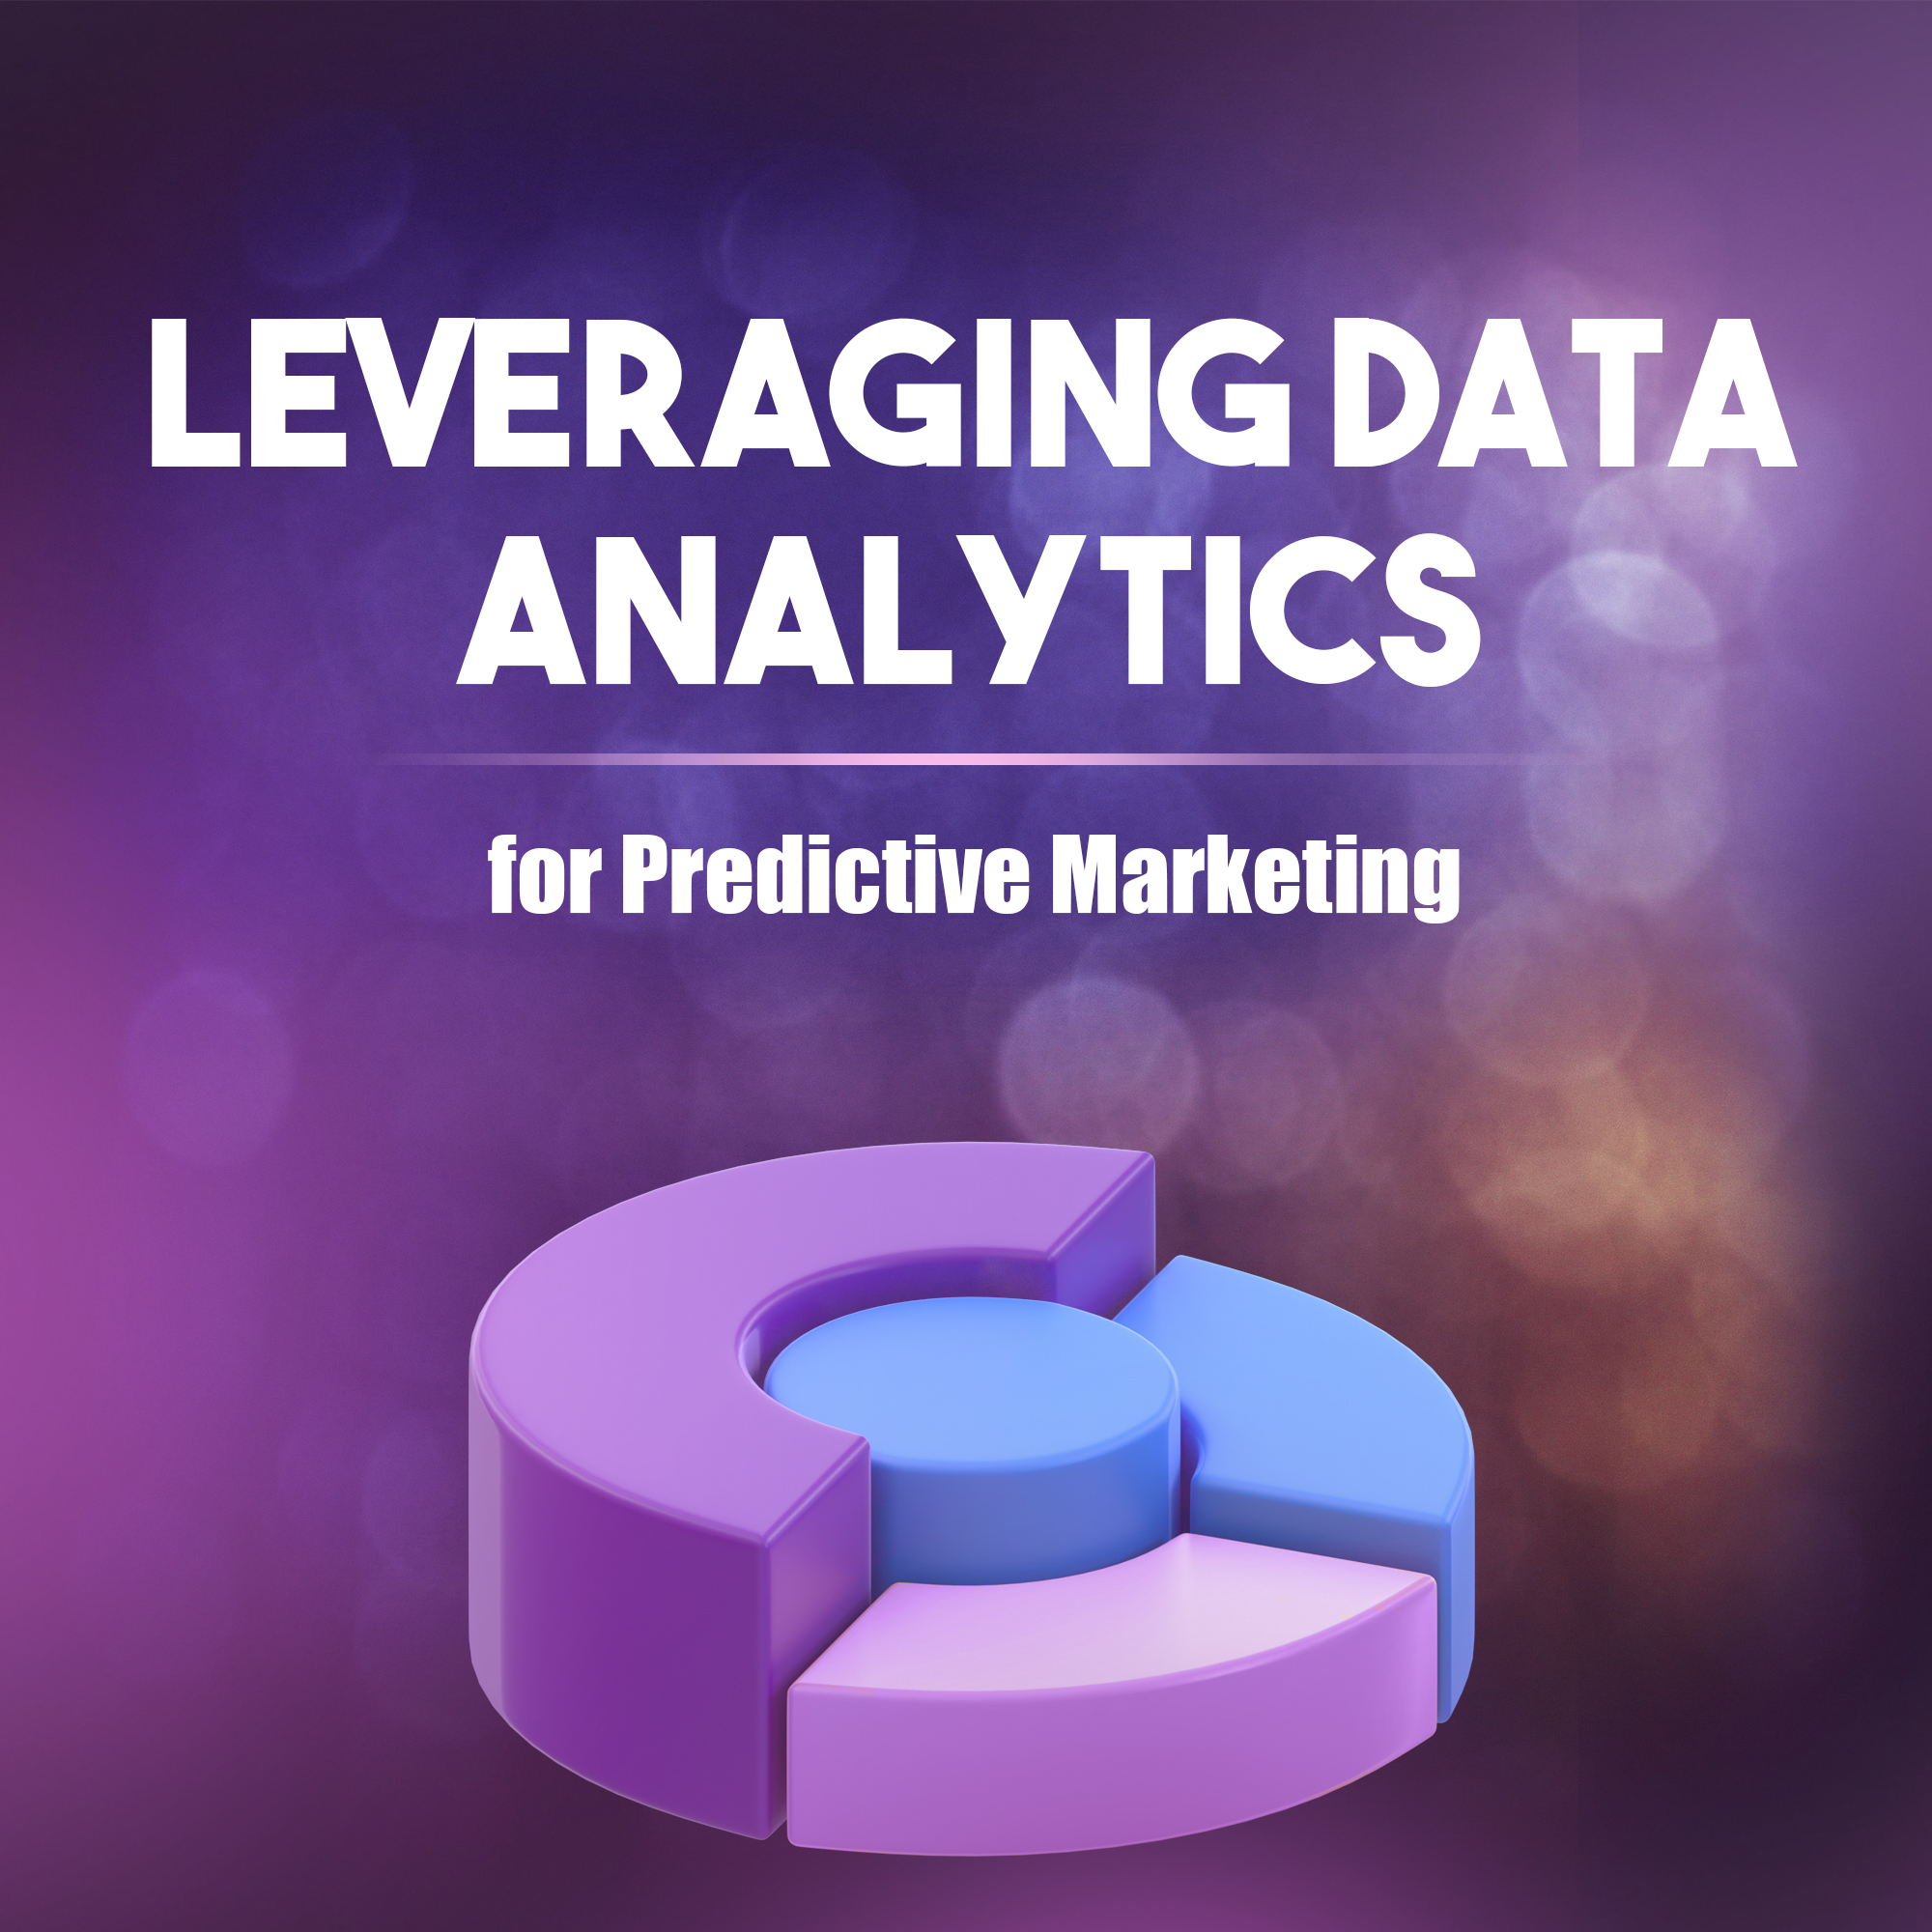 Leveraging Data the new marketing era